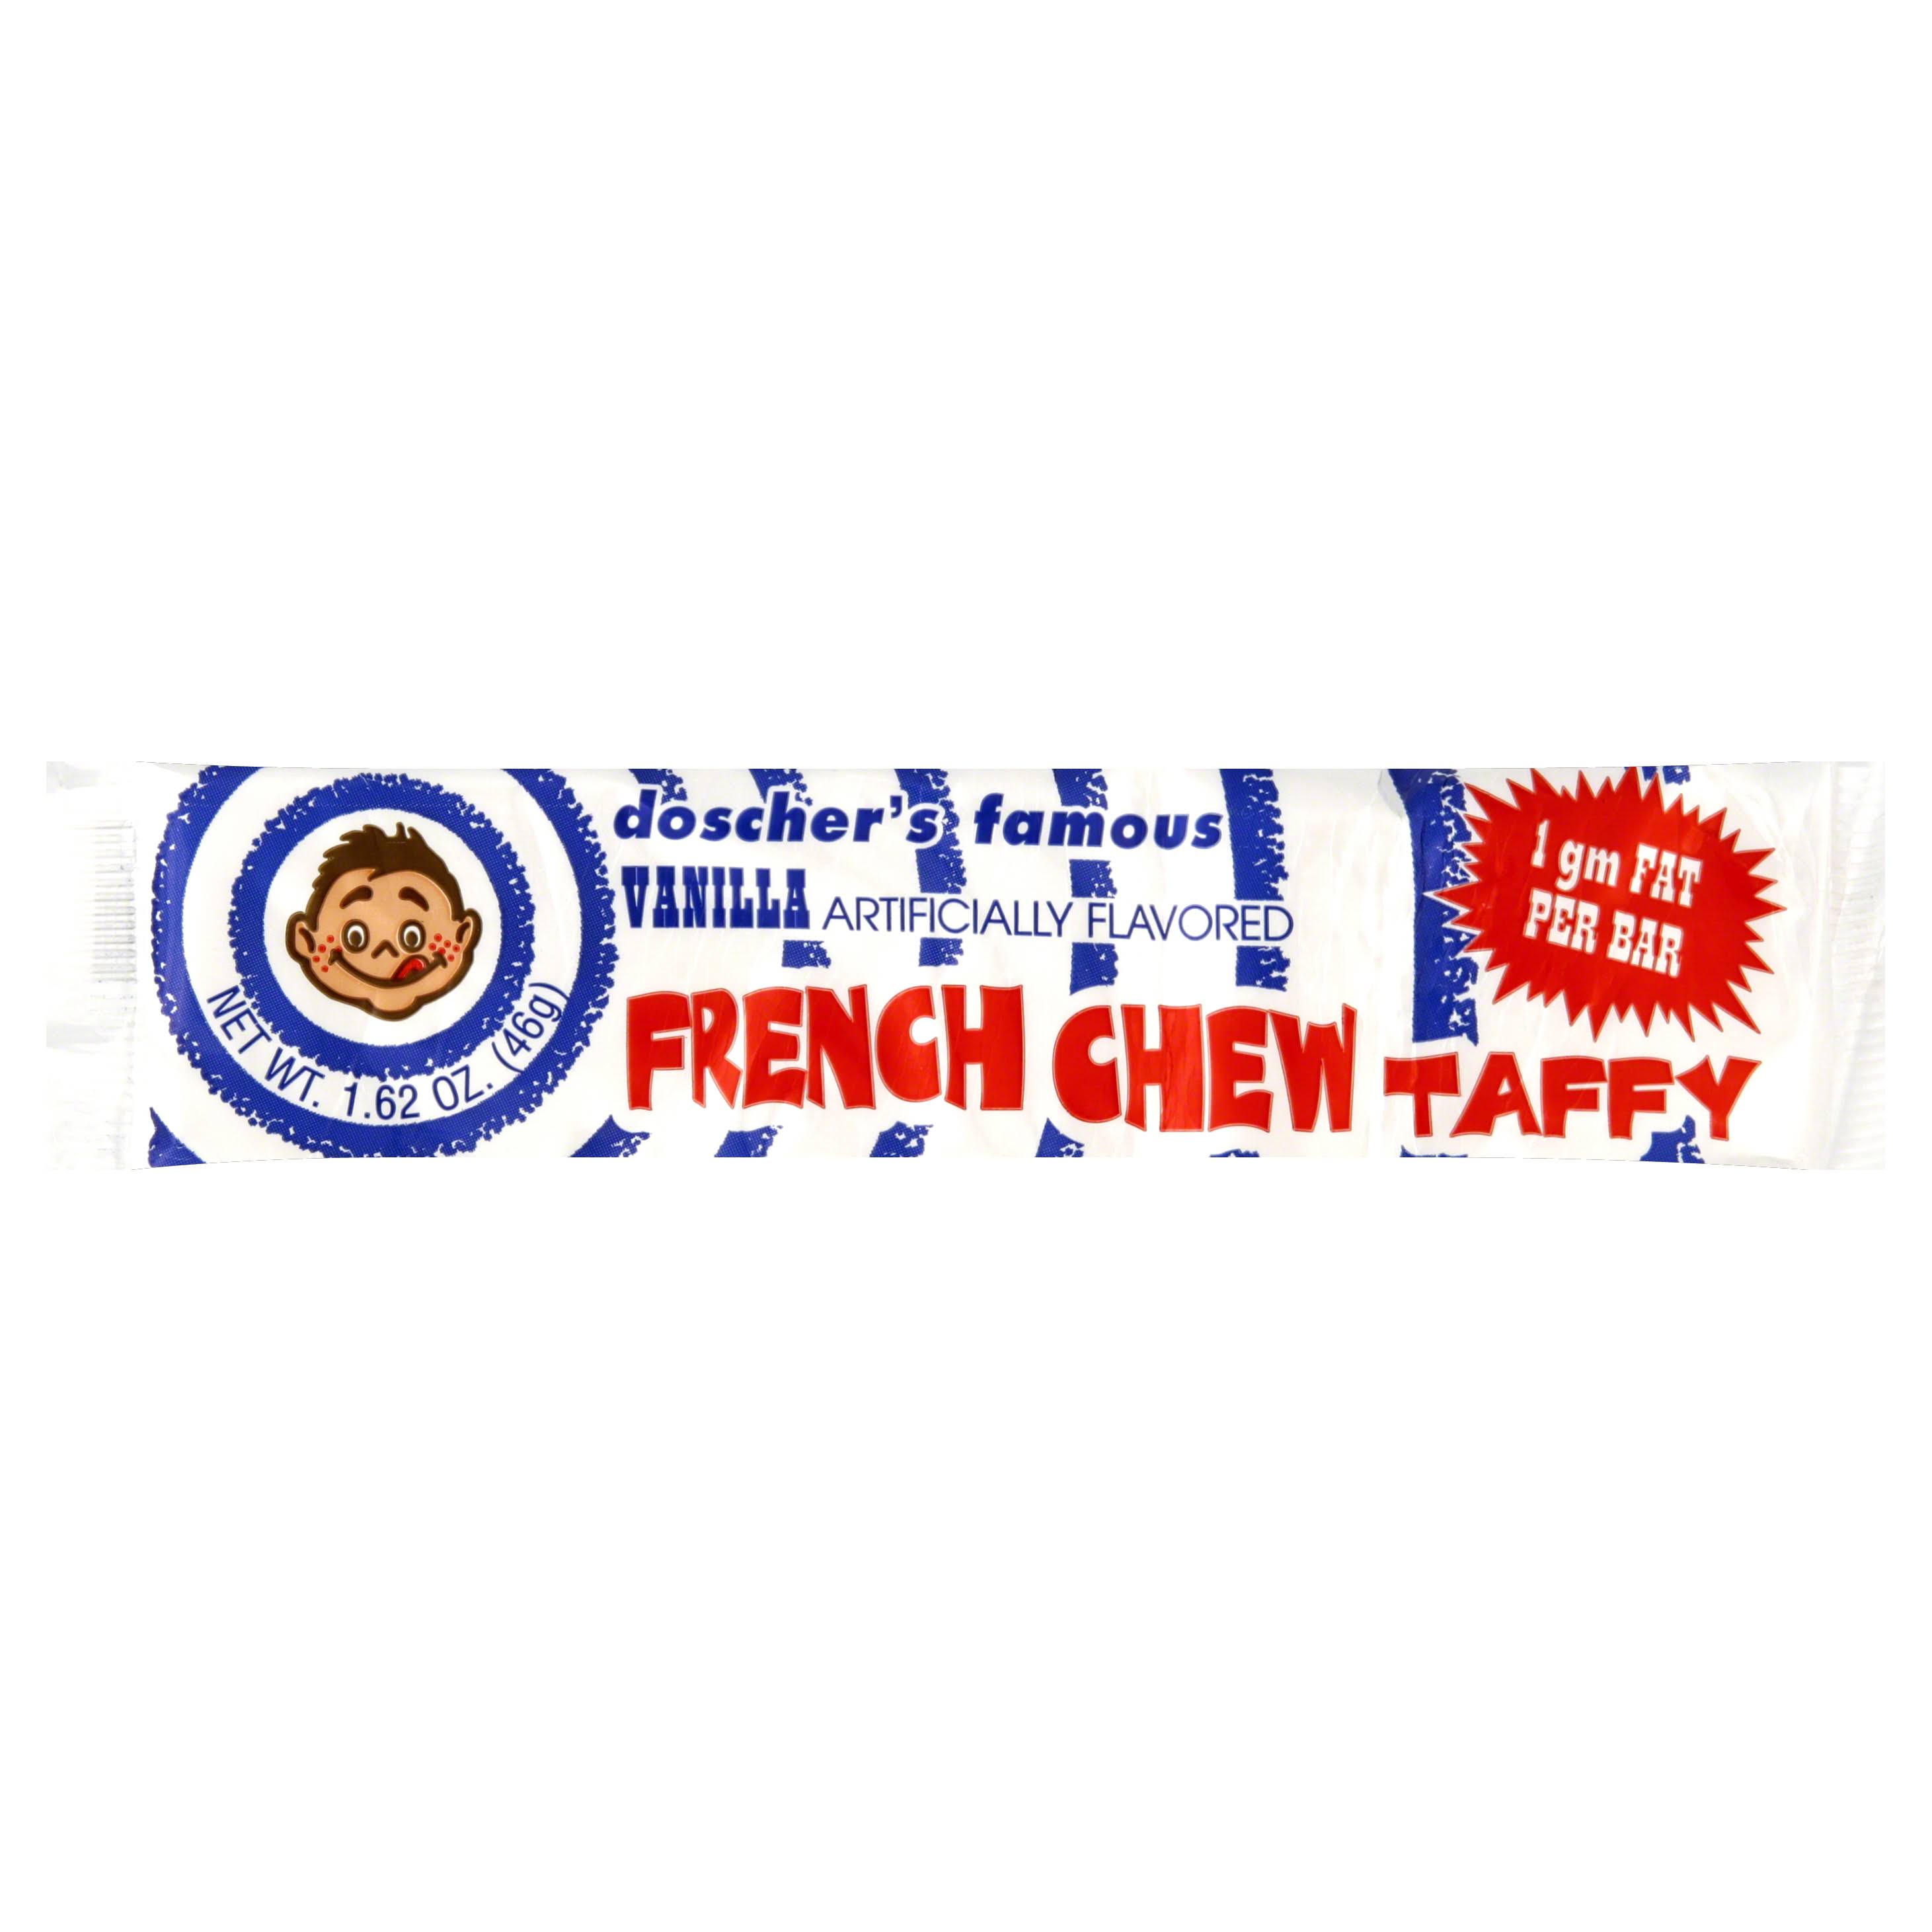 Doschers French Chew Taffy, Vanilla - 1.62 oz